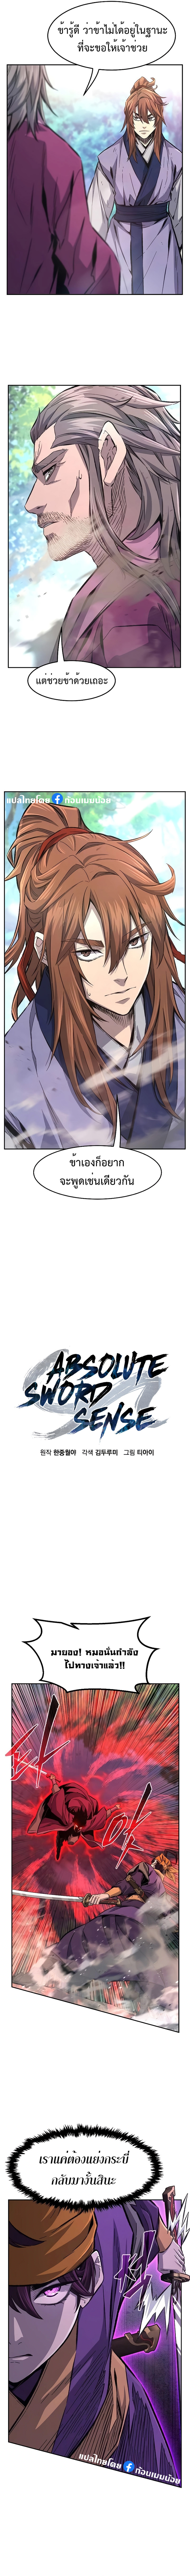 Absolute Sword Sense 89 (5)